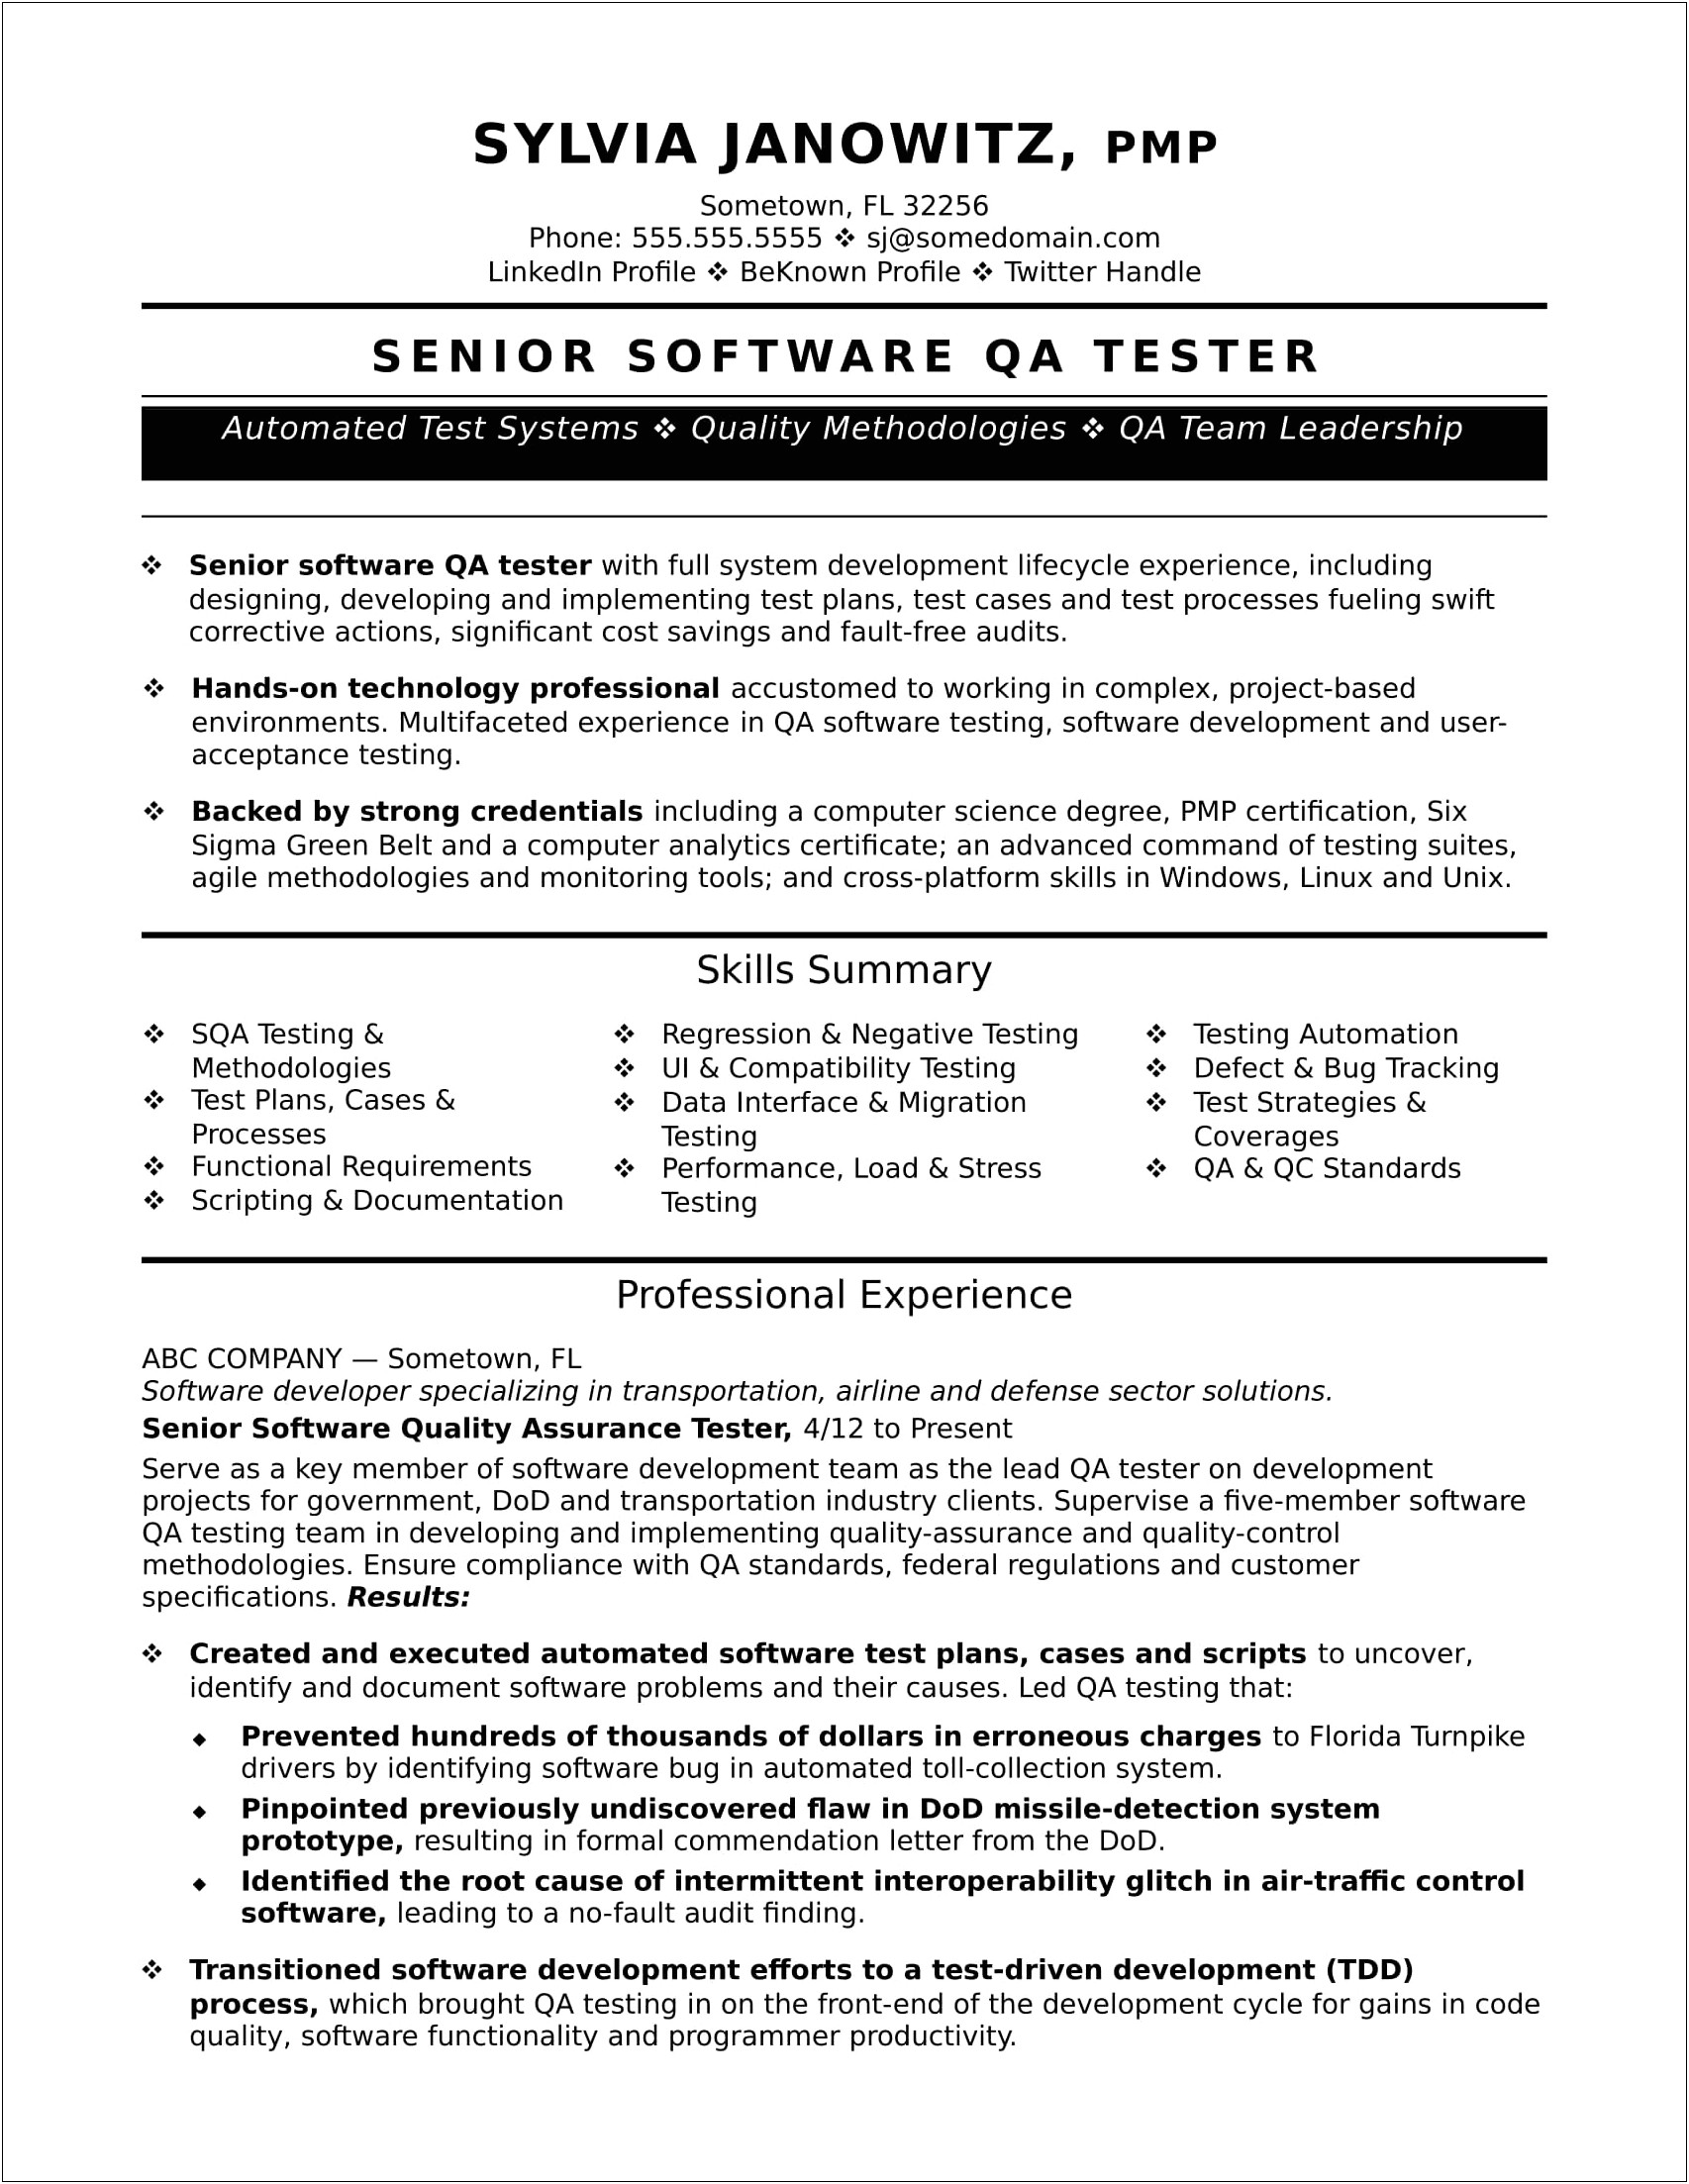 Manual Testing Resume Technical Skills